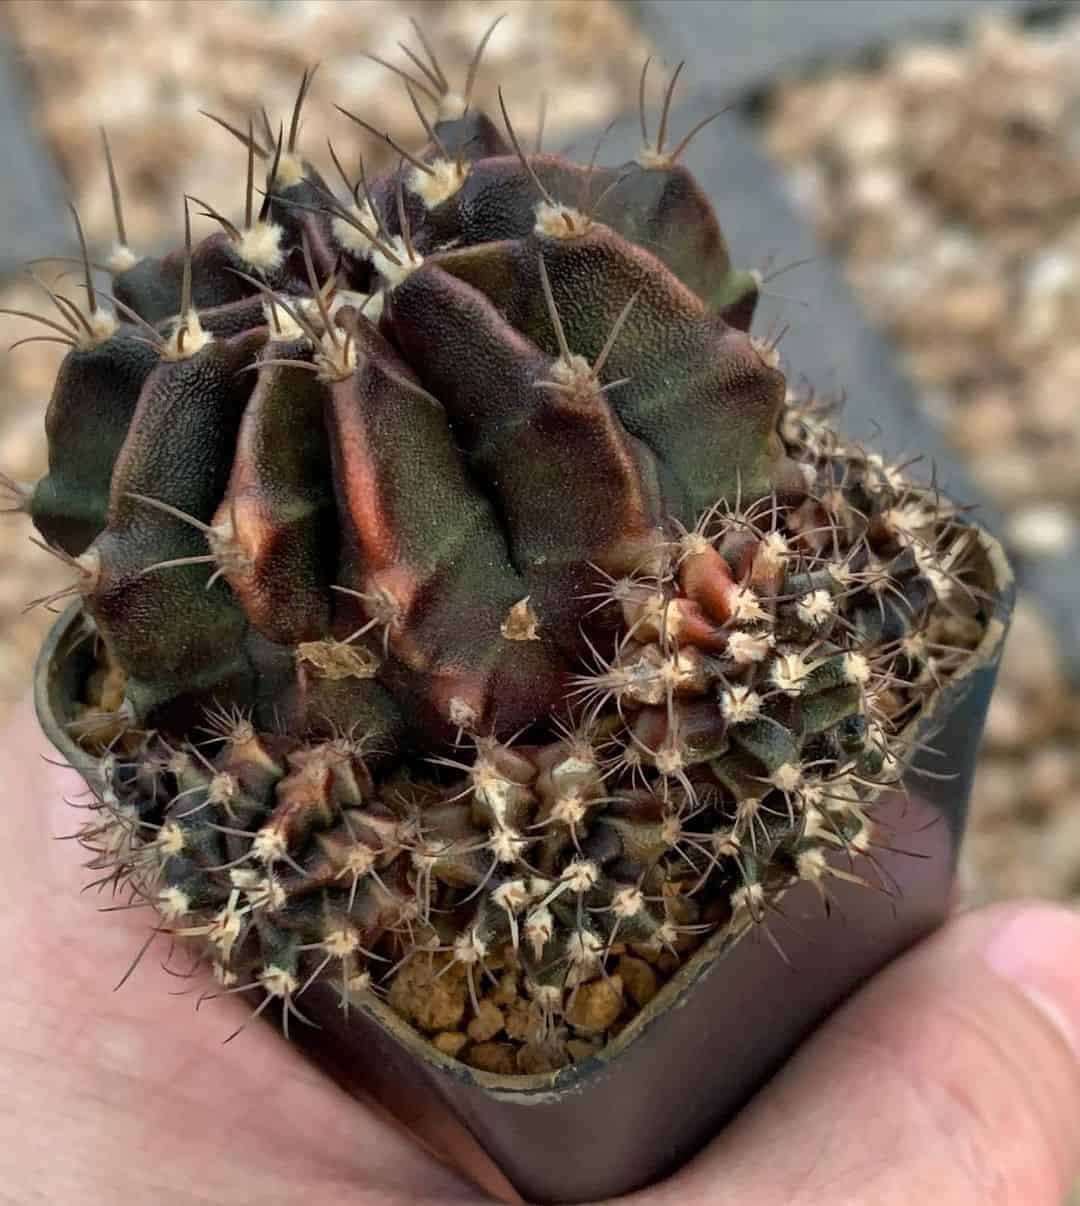 cactus in a black pot